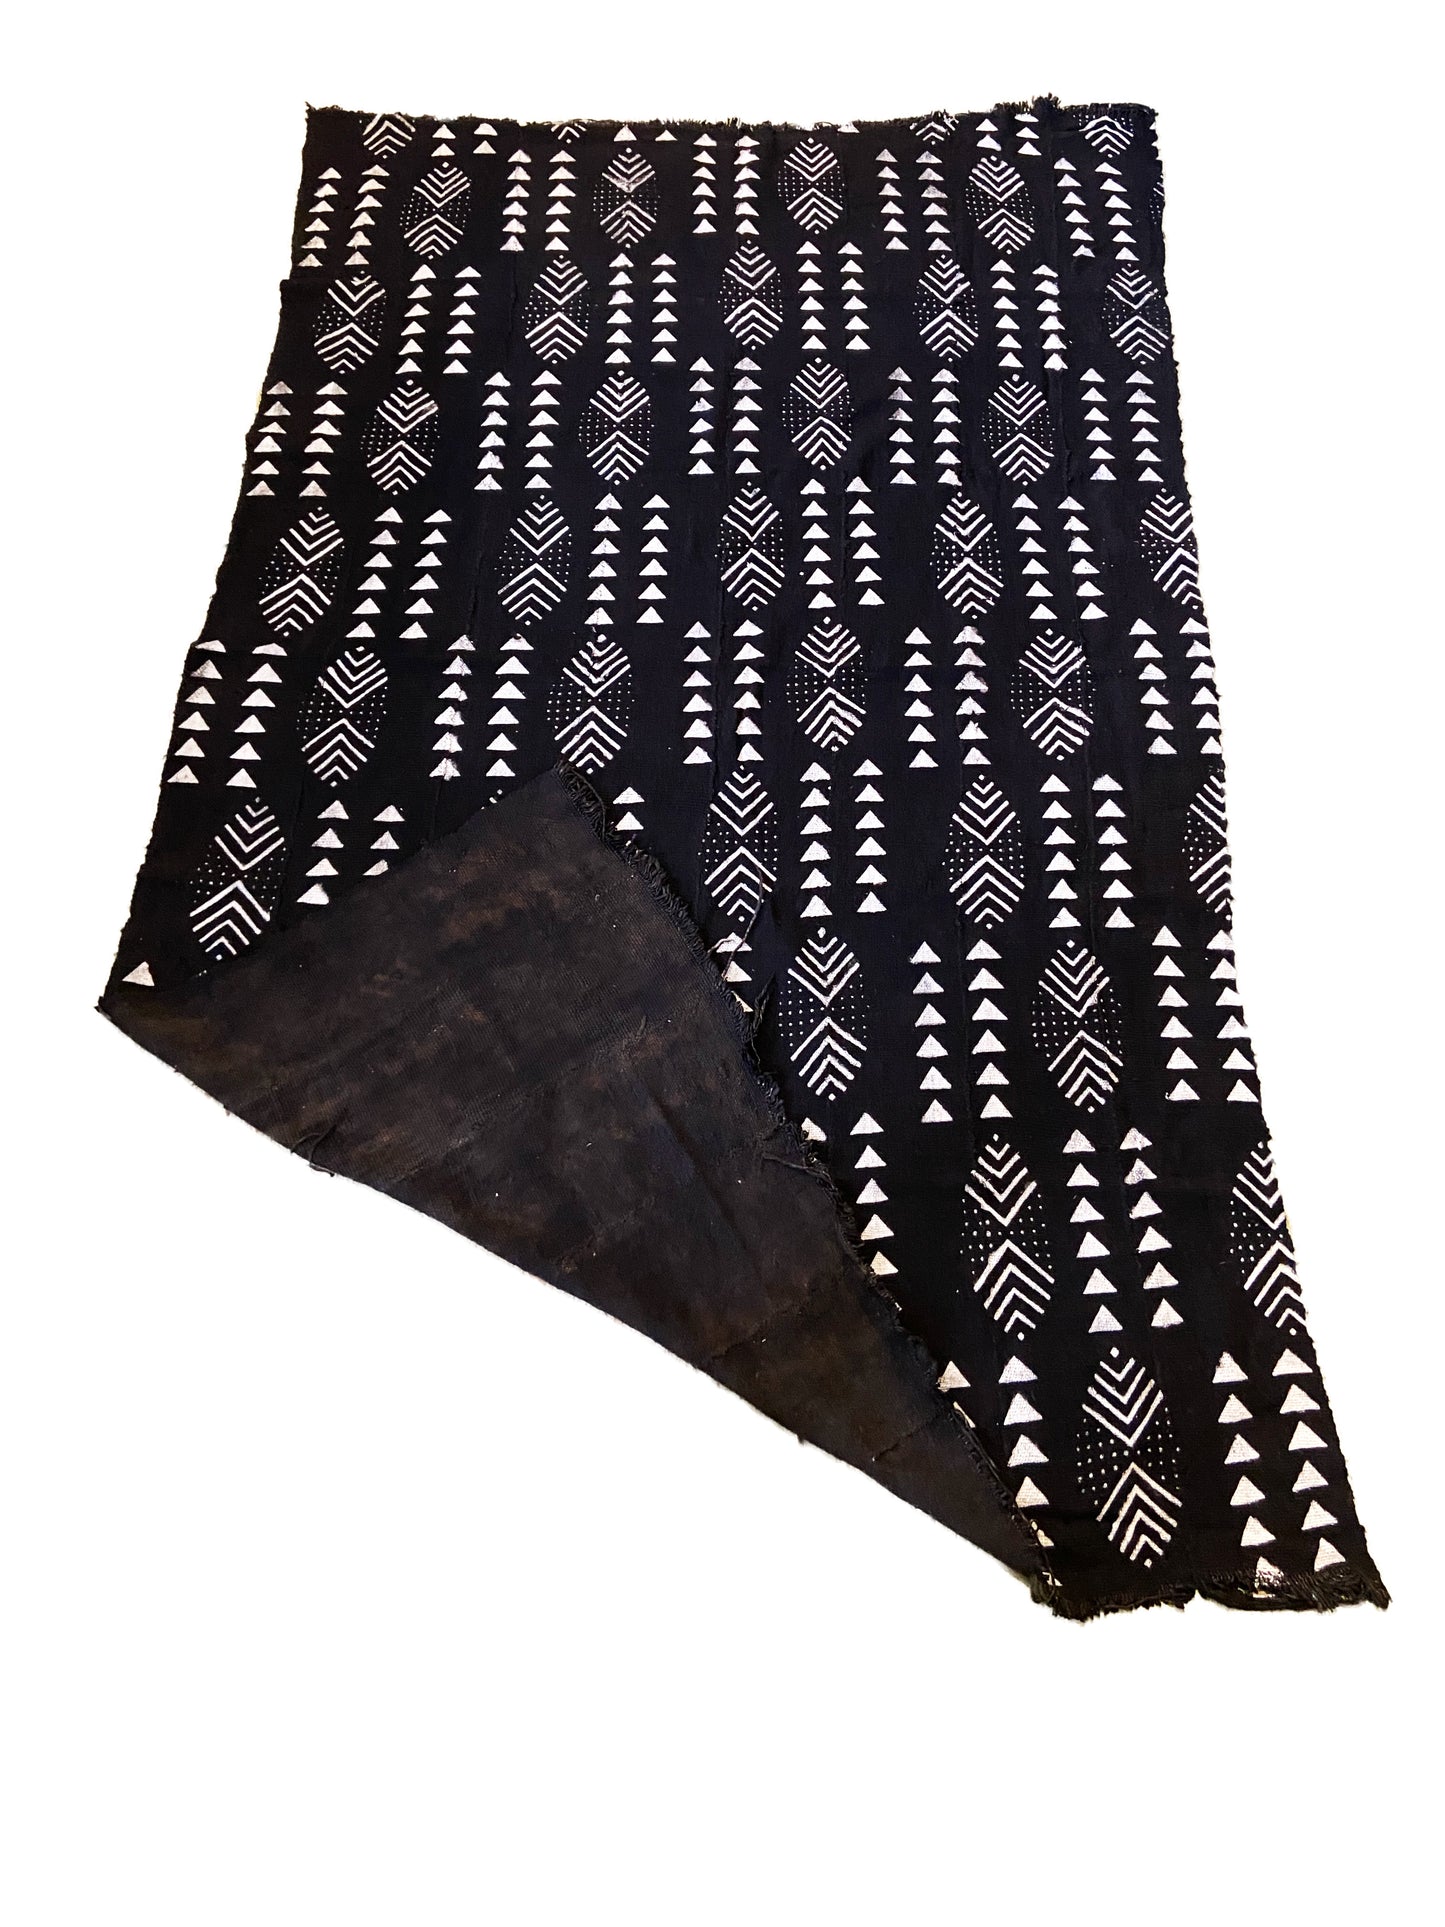 Malian Black & White Mud Cloth Textile #3620